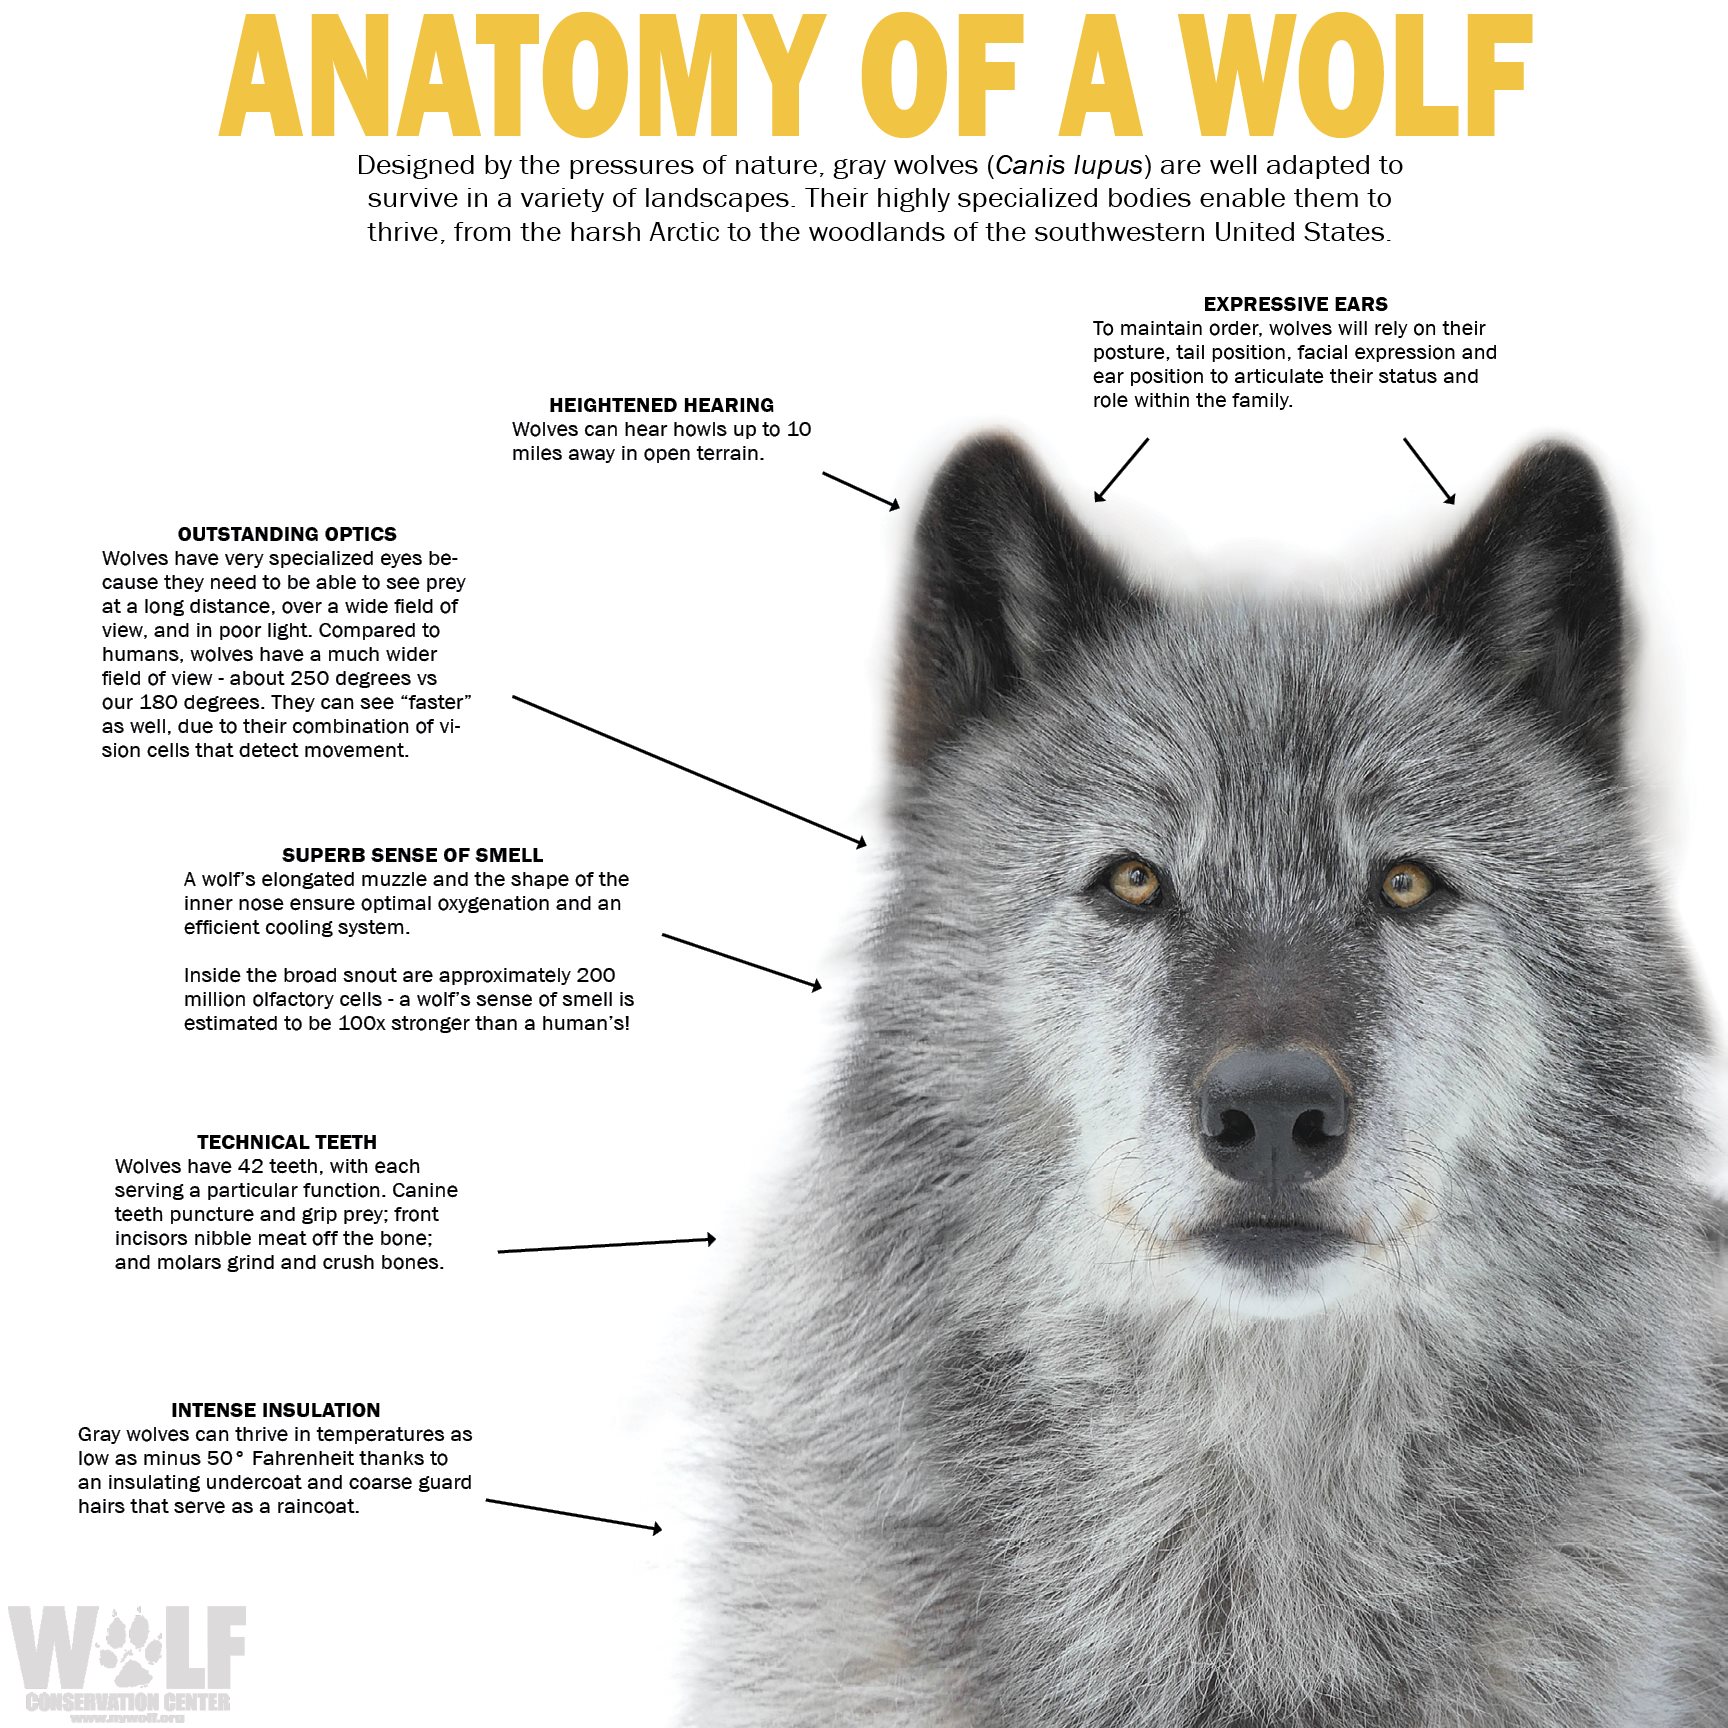 creative writing description of a wolf